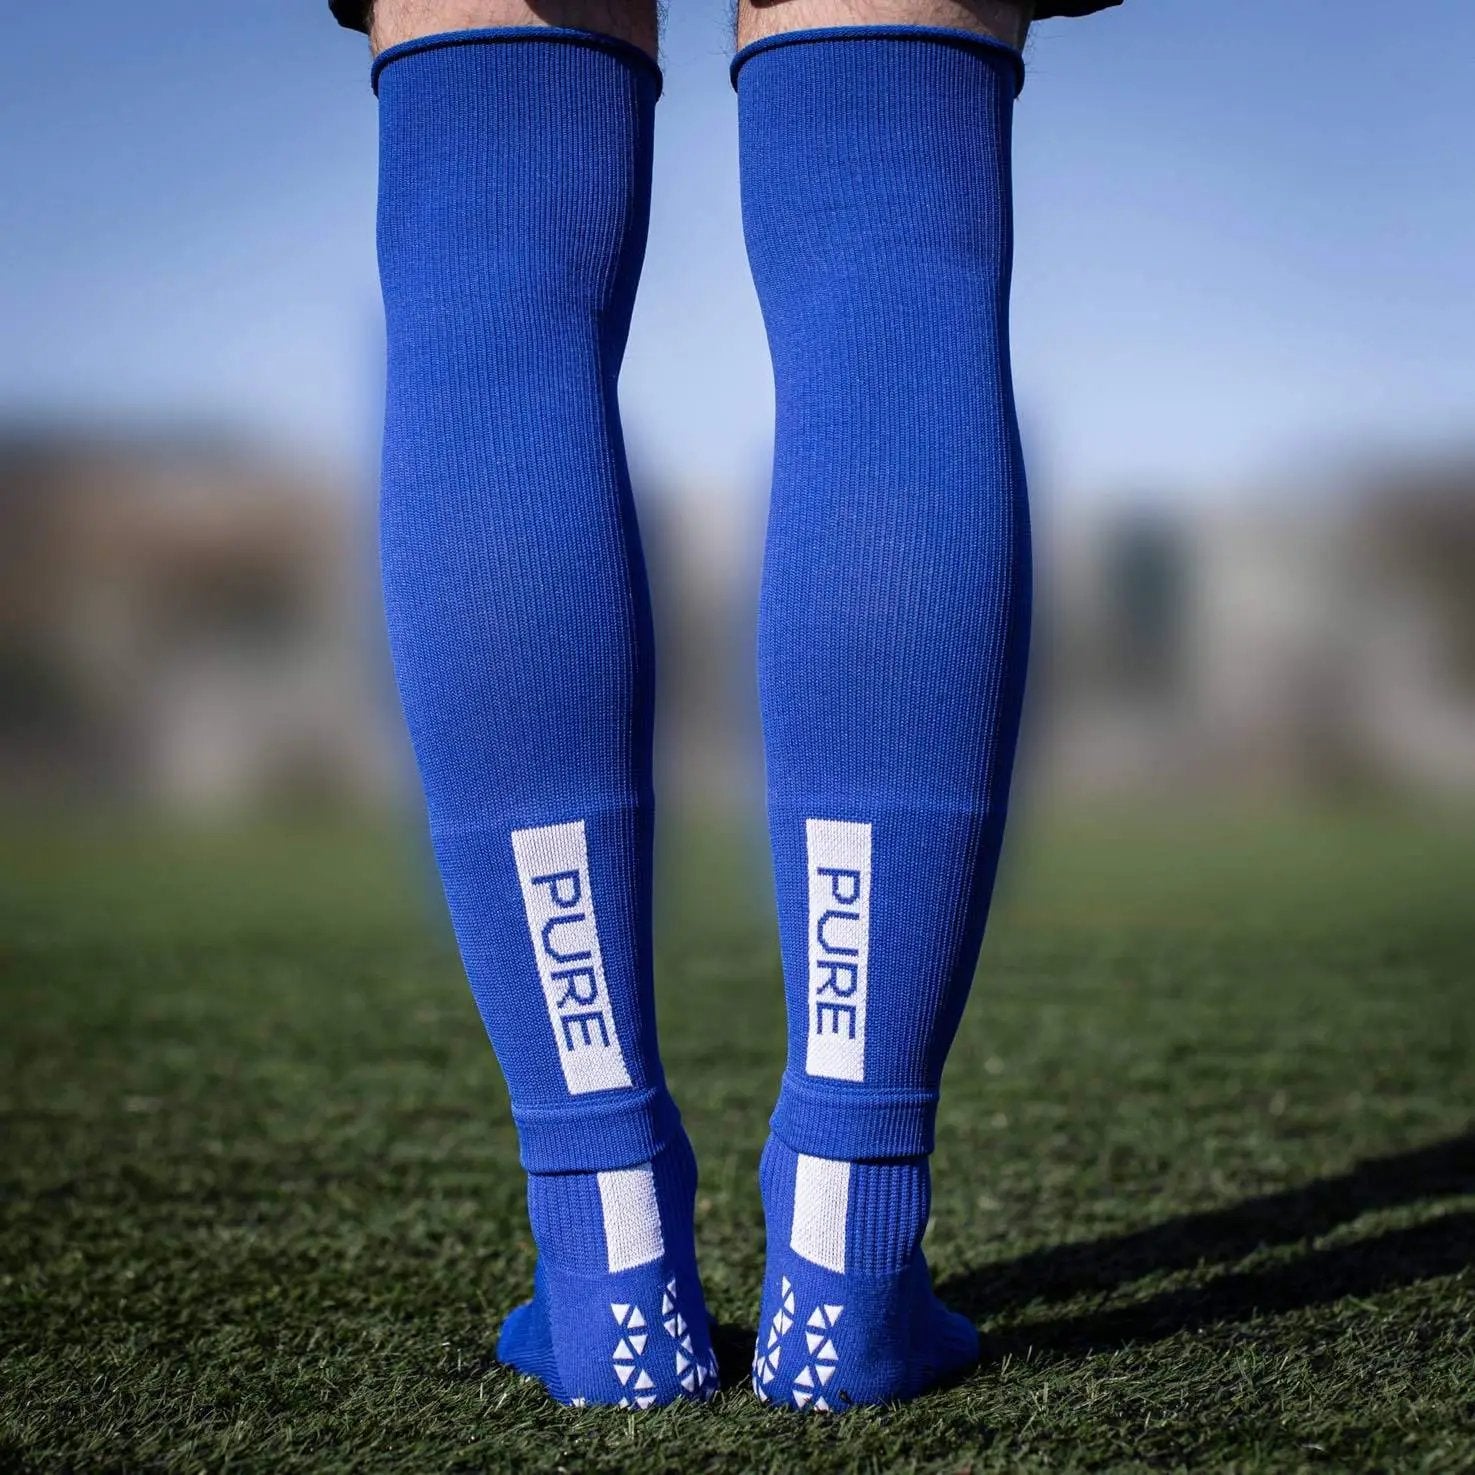 Pure Grip Socks Pro Red– Premium Soccer